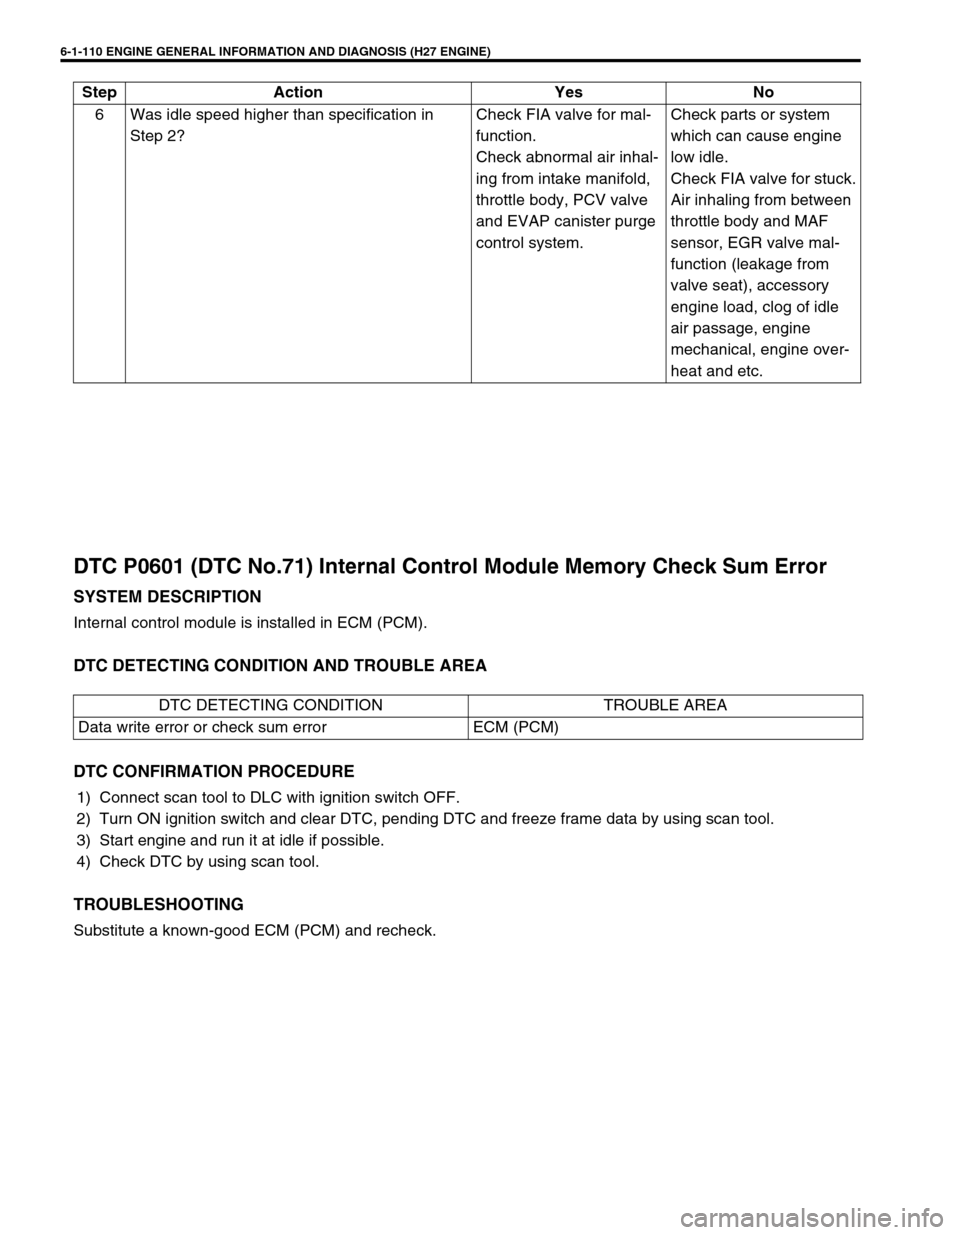 SUZUKI GRAND VITARA 2001 2.G Manual PDF 6-1-110 ENGINE GENERAL INFORMATION AND DIAGNOSIS (H27 ENGINE)
DTC P0601 (DTC No.71) Internal Control Module Memory Check Sum Error
SYSTEM DESCRIPTION
Internal control module is installed in ECM (PCM).